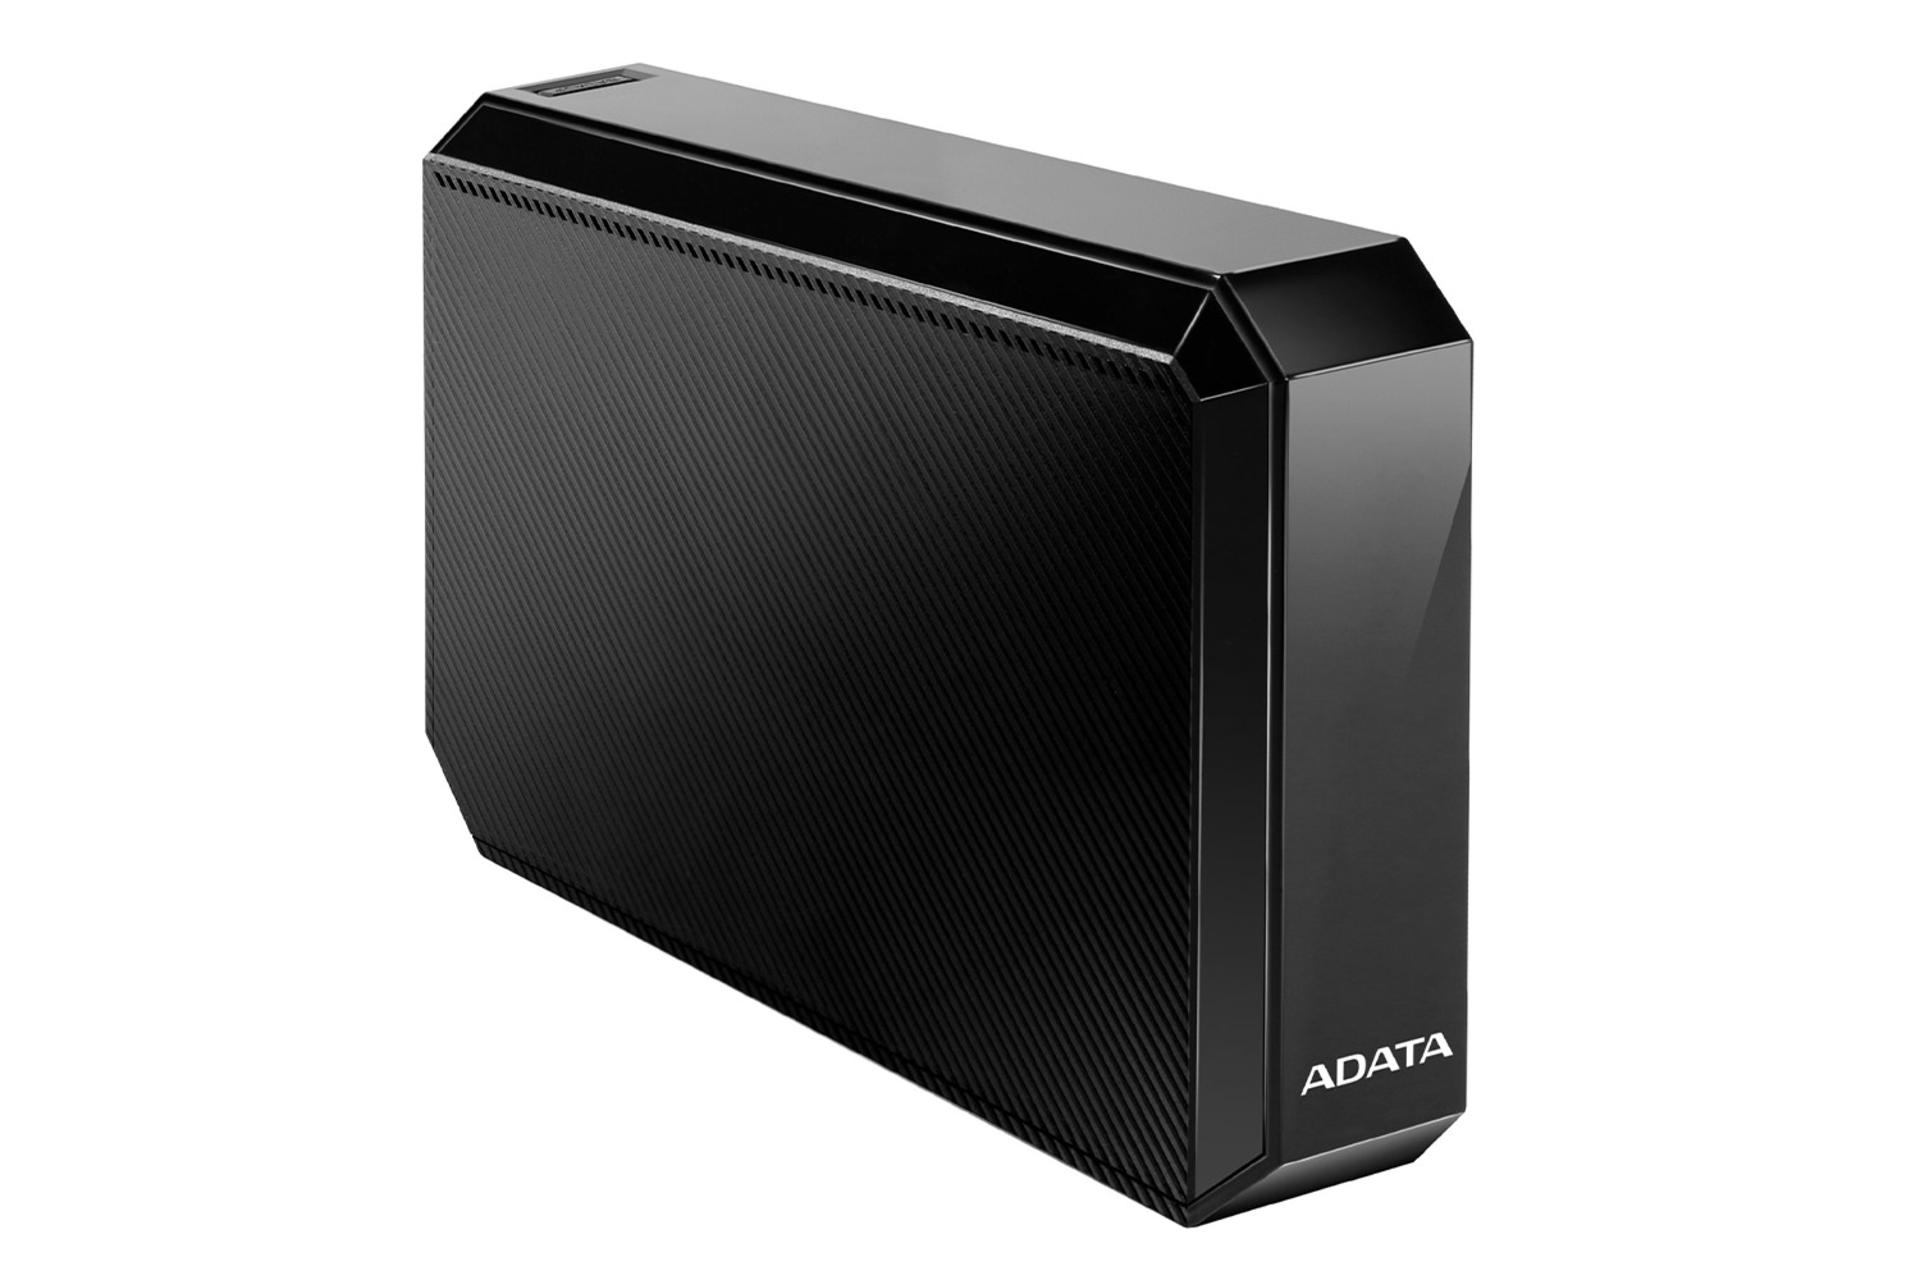 ADATA HM800 8TB / ای دیتا HM800 ظرفیت 8 ترابایت